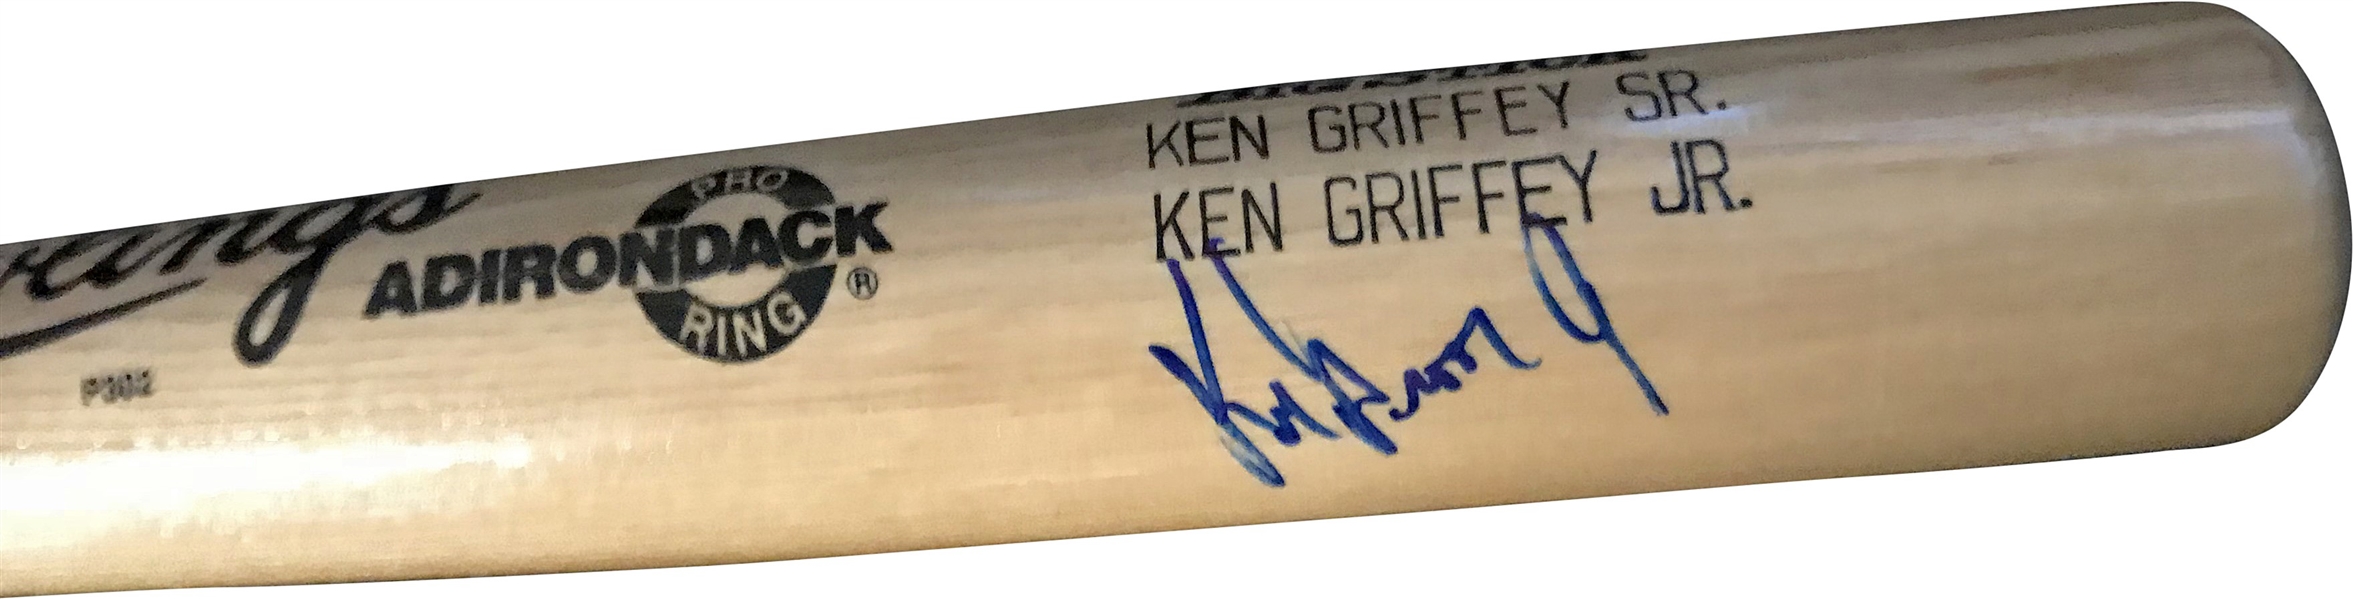 Ken Griffey Jr. & Ken Griffey Sr. Signed Baseball Bat (JSA)